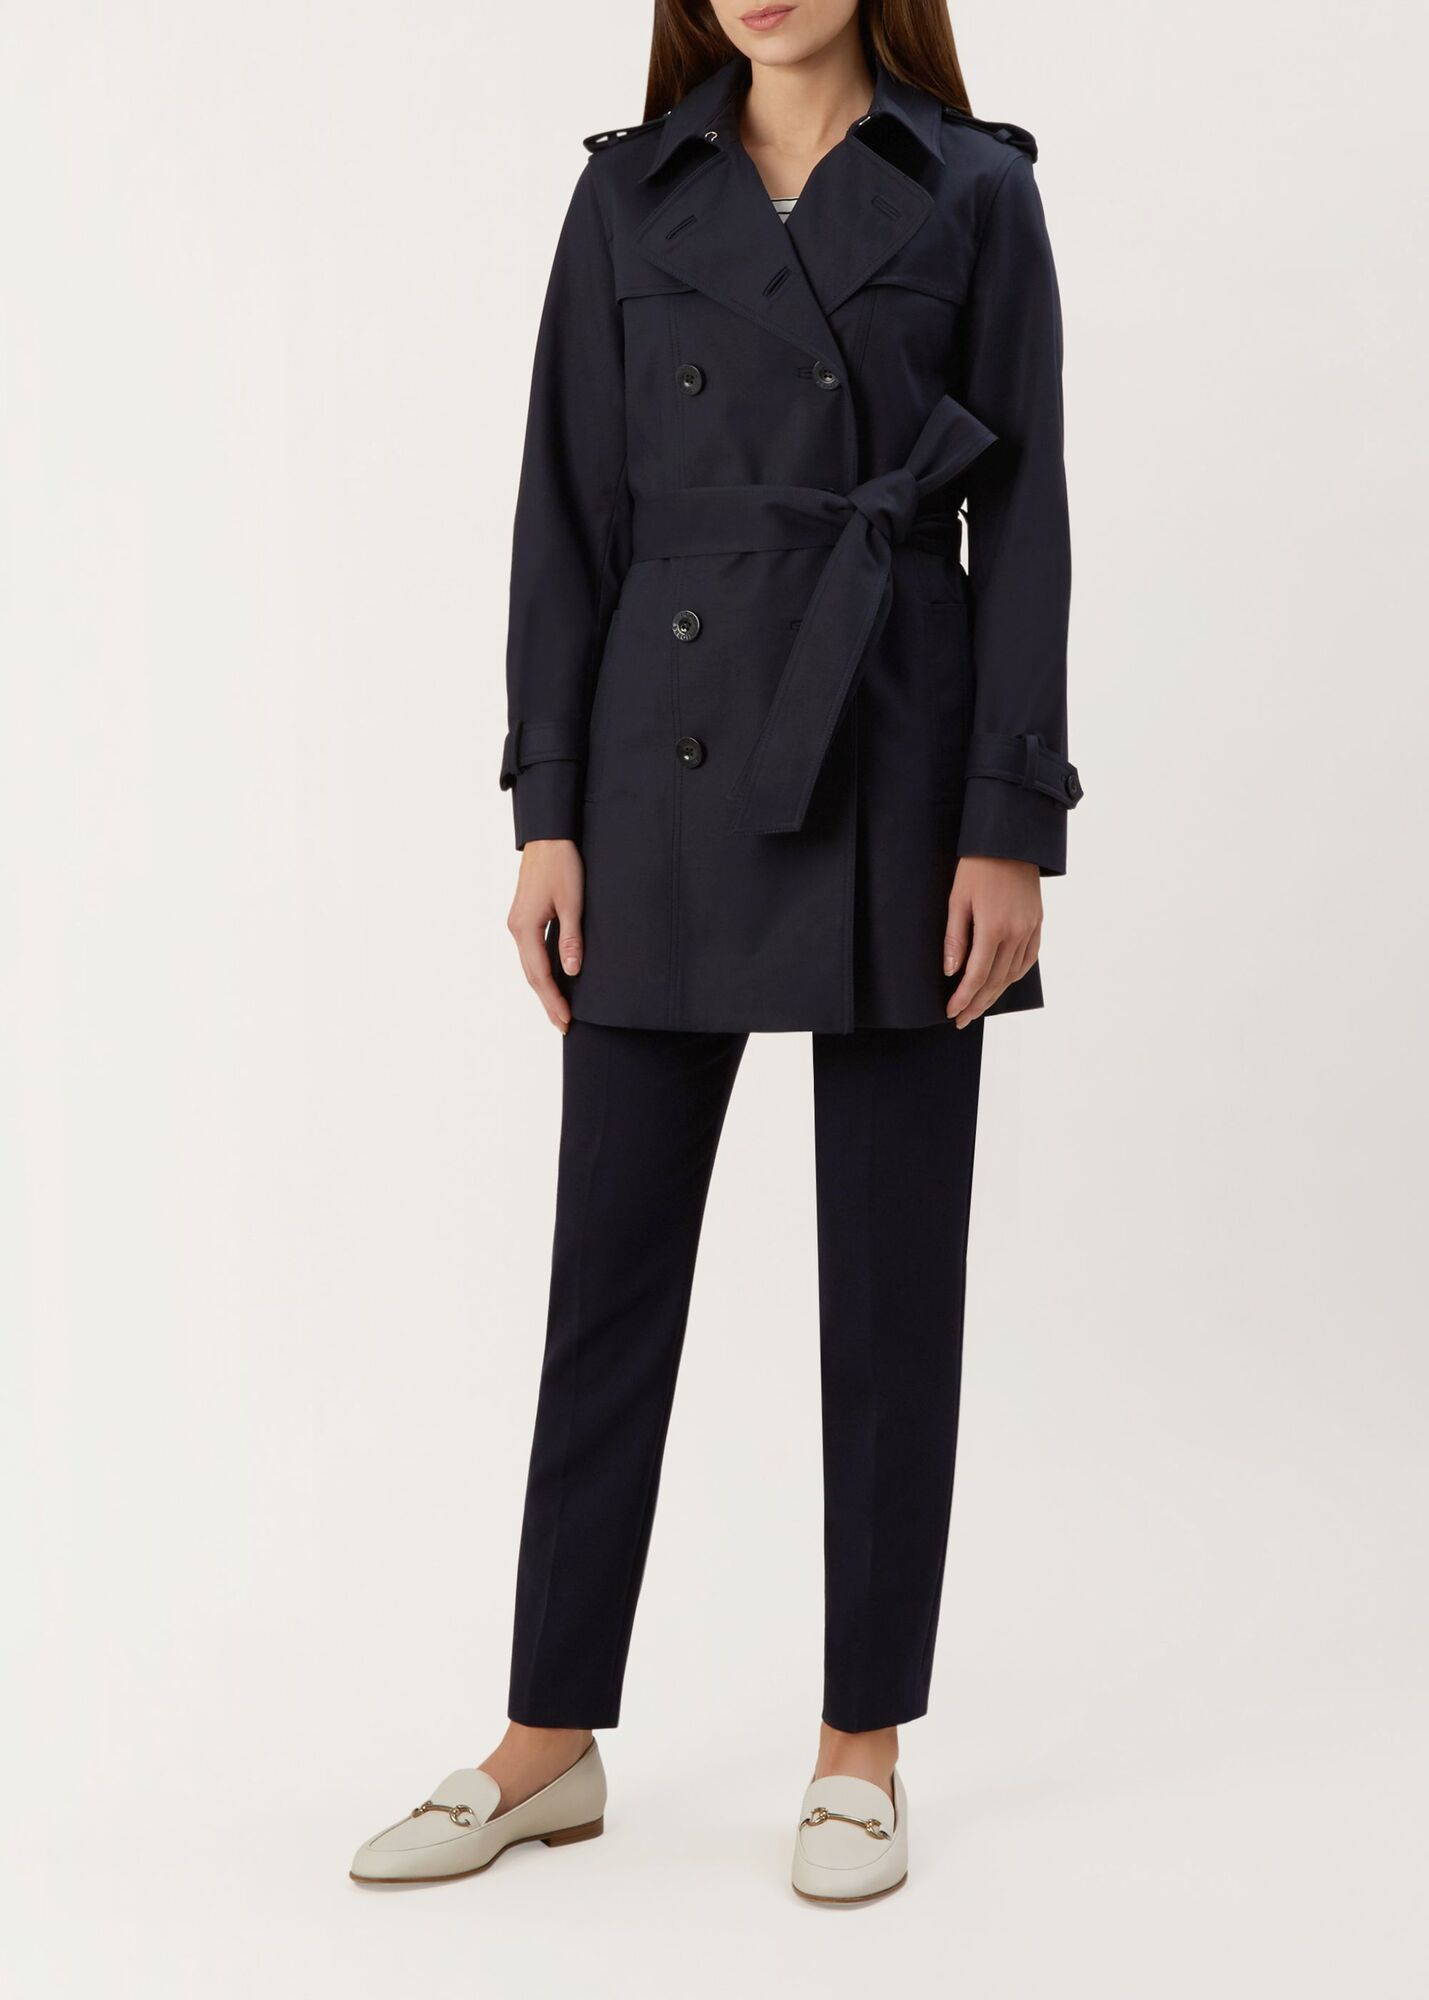 Short Sara Mac Coat, UK Size 10, Black